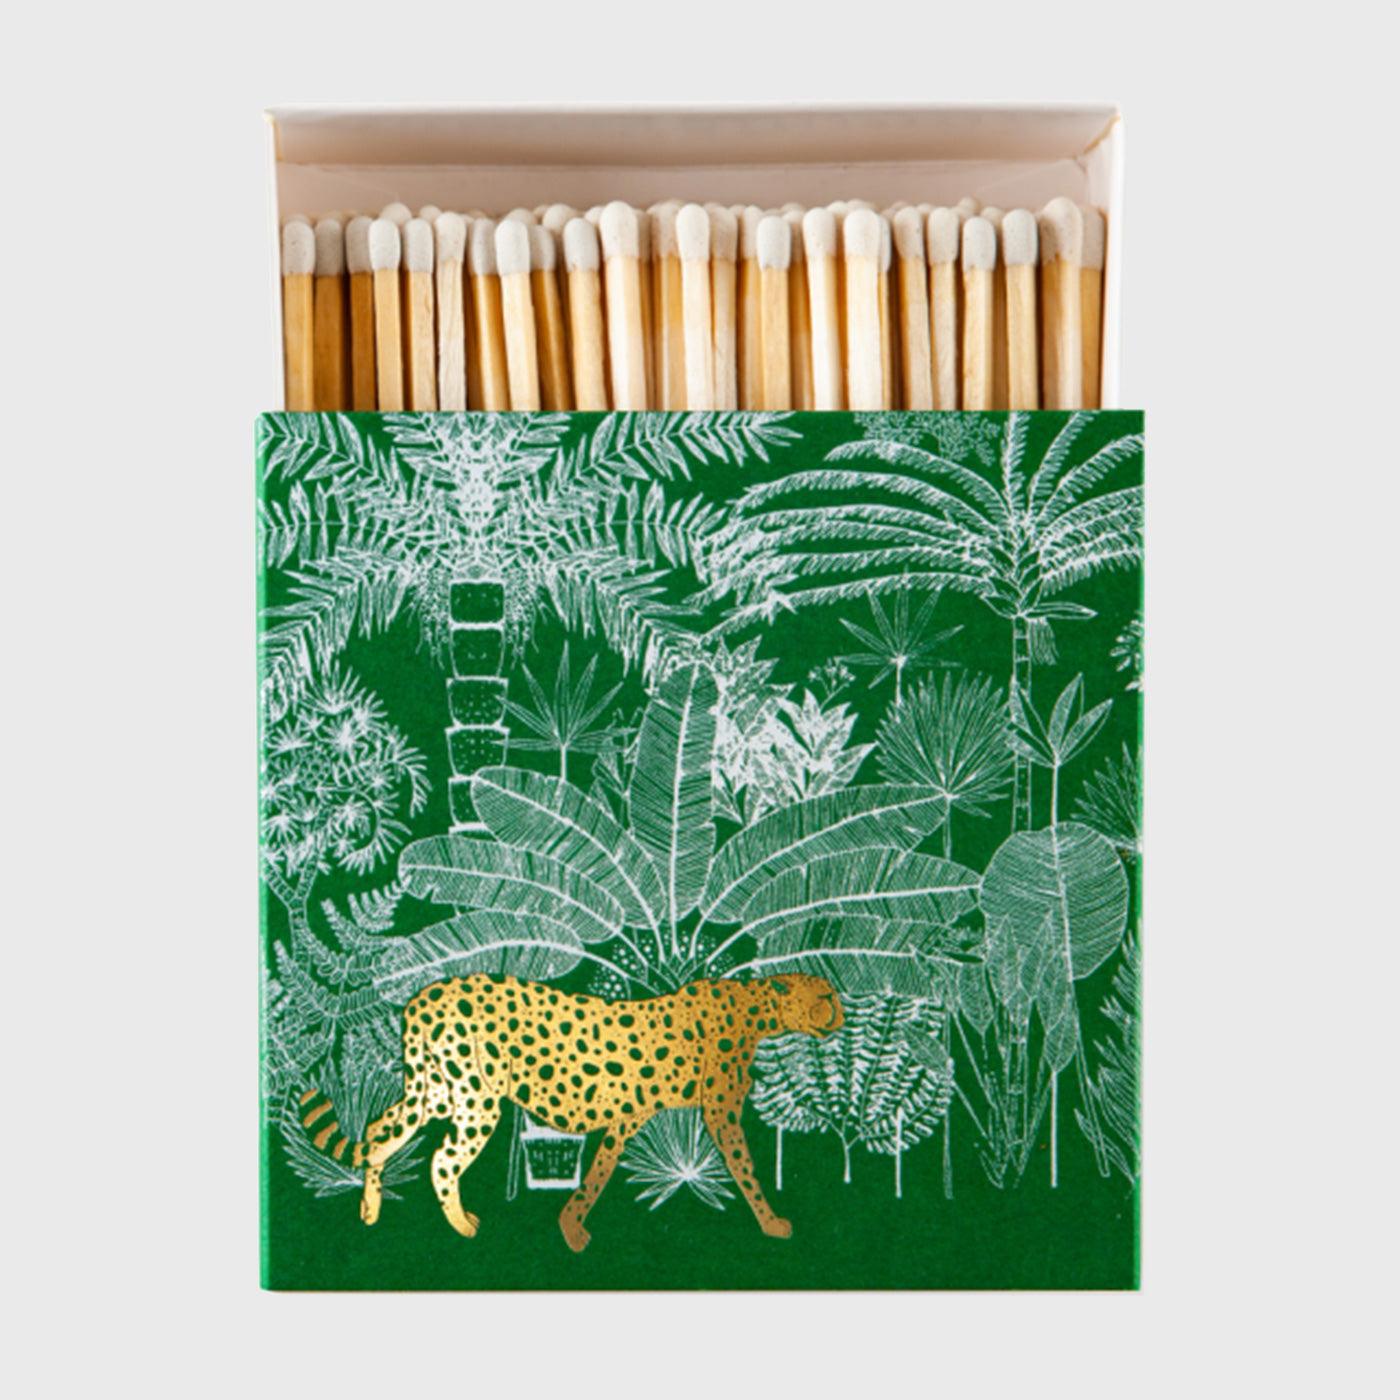 The Fine Matchbox Company - Archivist Cheetah in Jungle Match Lucifersp - The Candle Club